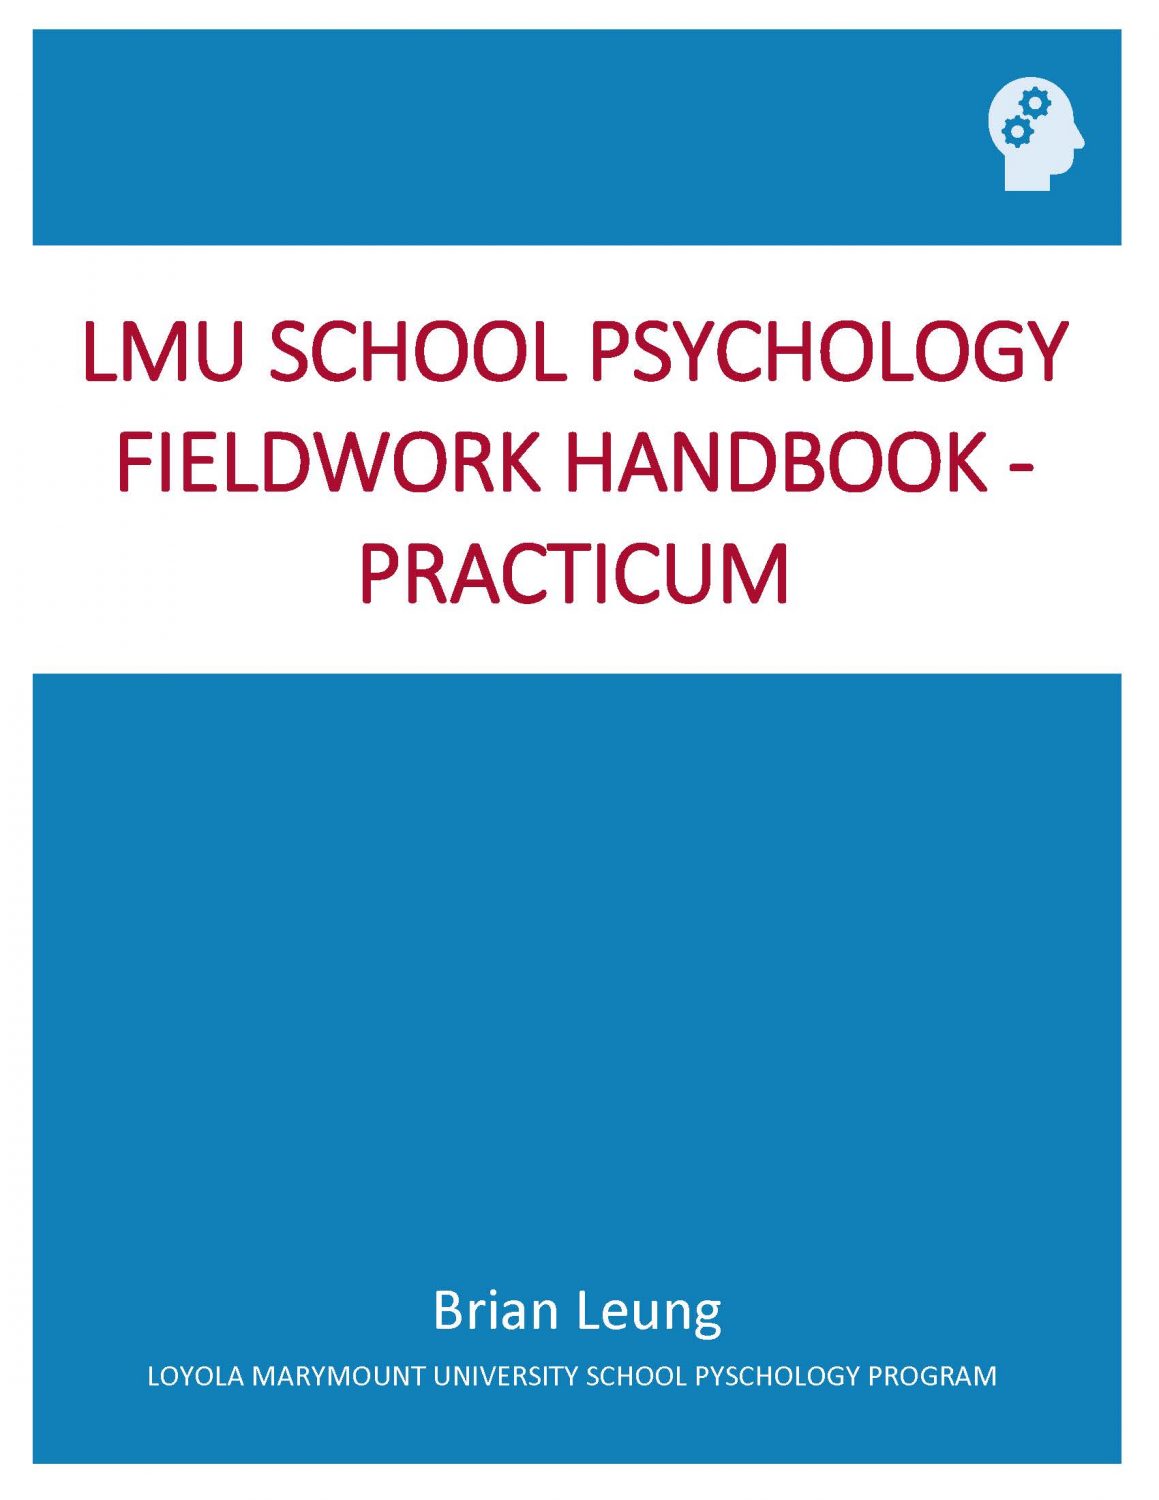 Cover image for Loyola Marymount University School Psychology Fieldwork Handbook 2022 - Practicum